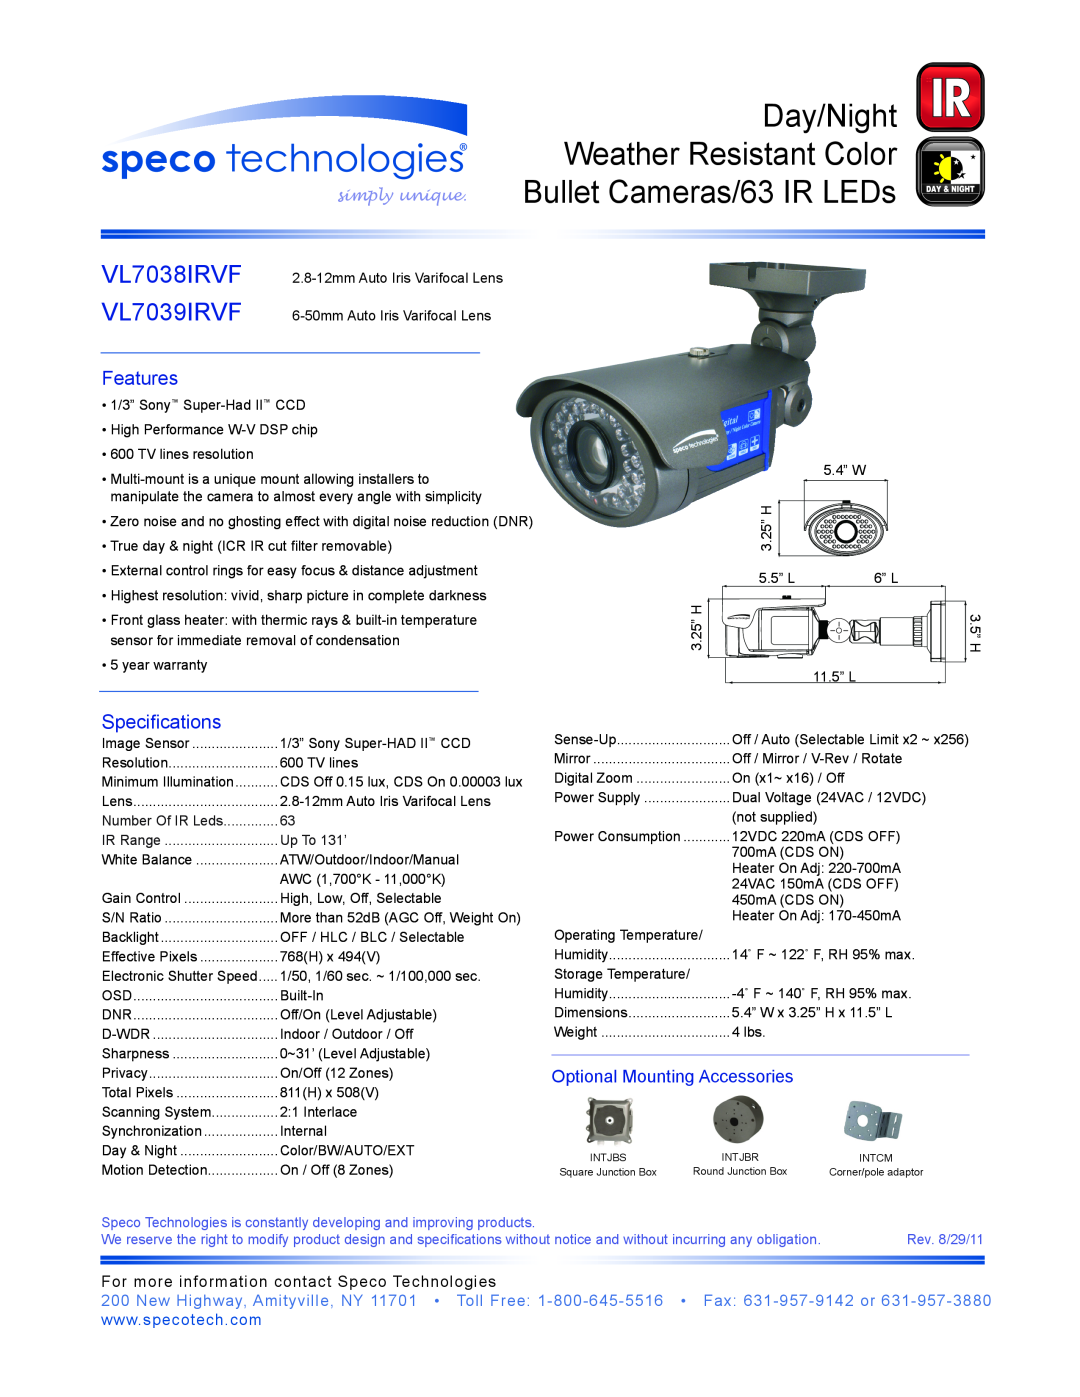 Speco Technologies instruction manual DNR Bullet Day/Night Weather-proof Camera, VL7038IRVF VL7039IRVF, Rev. 6/20/2012 